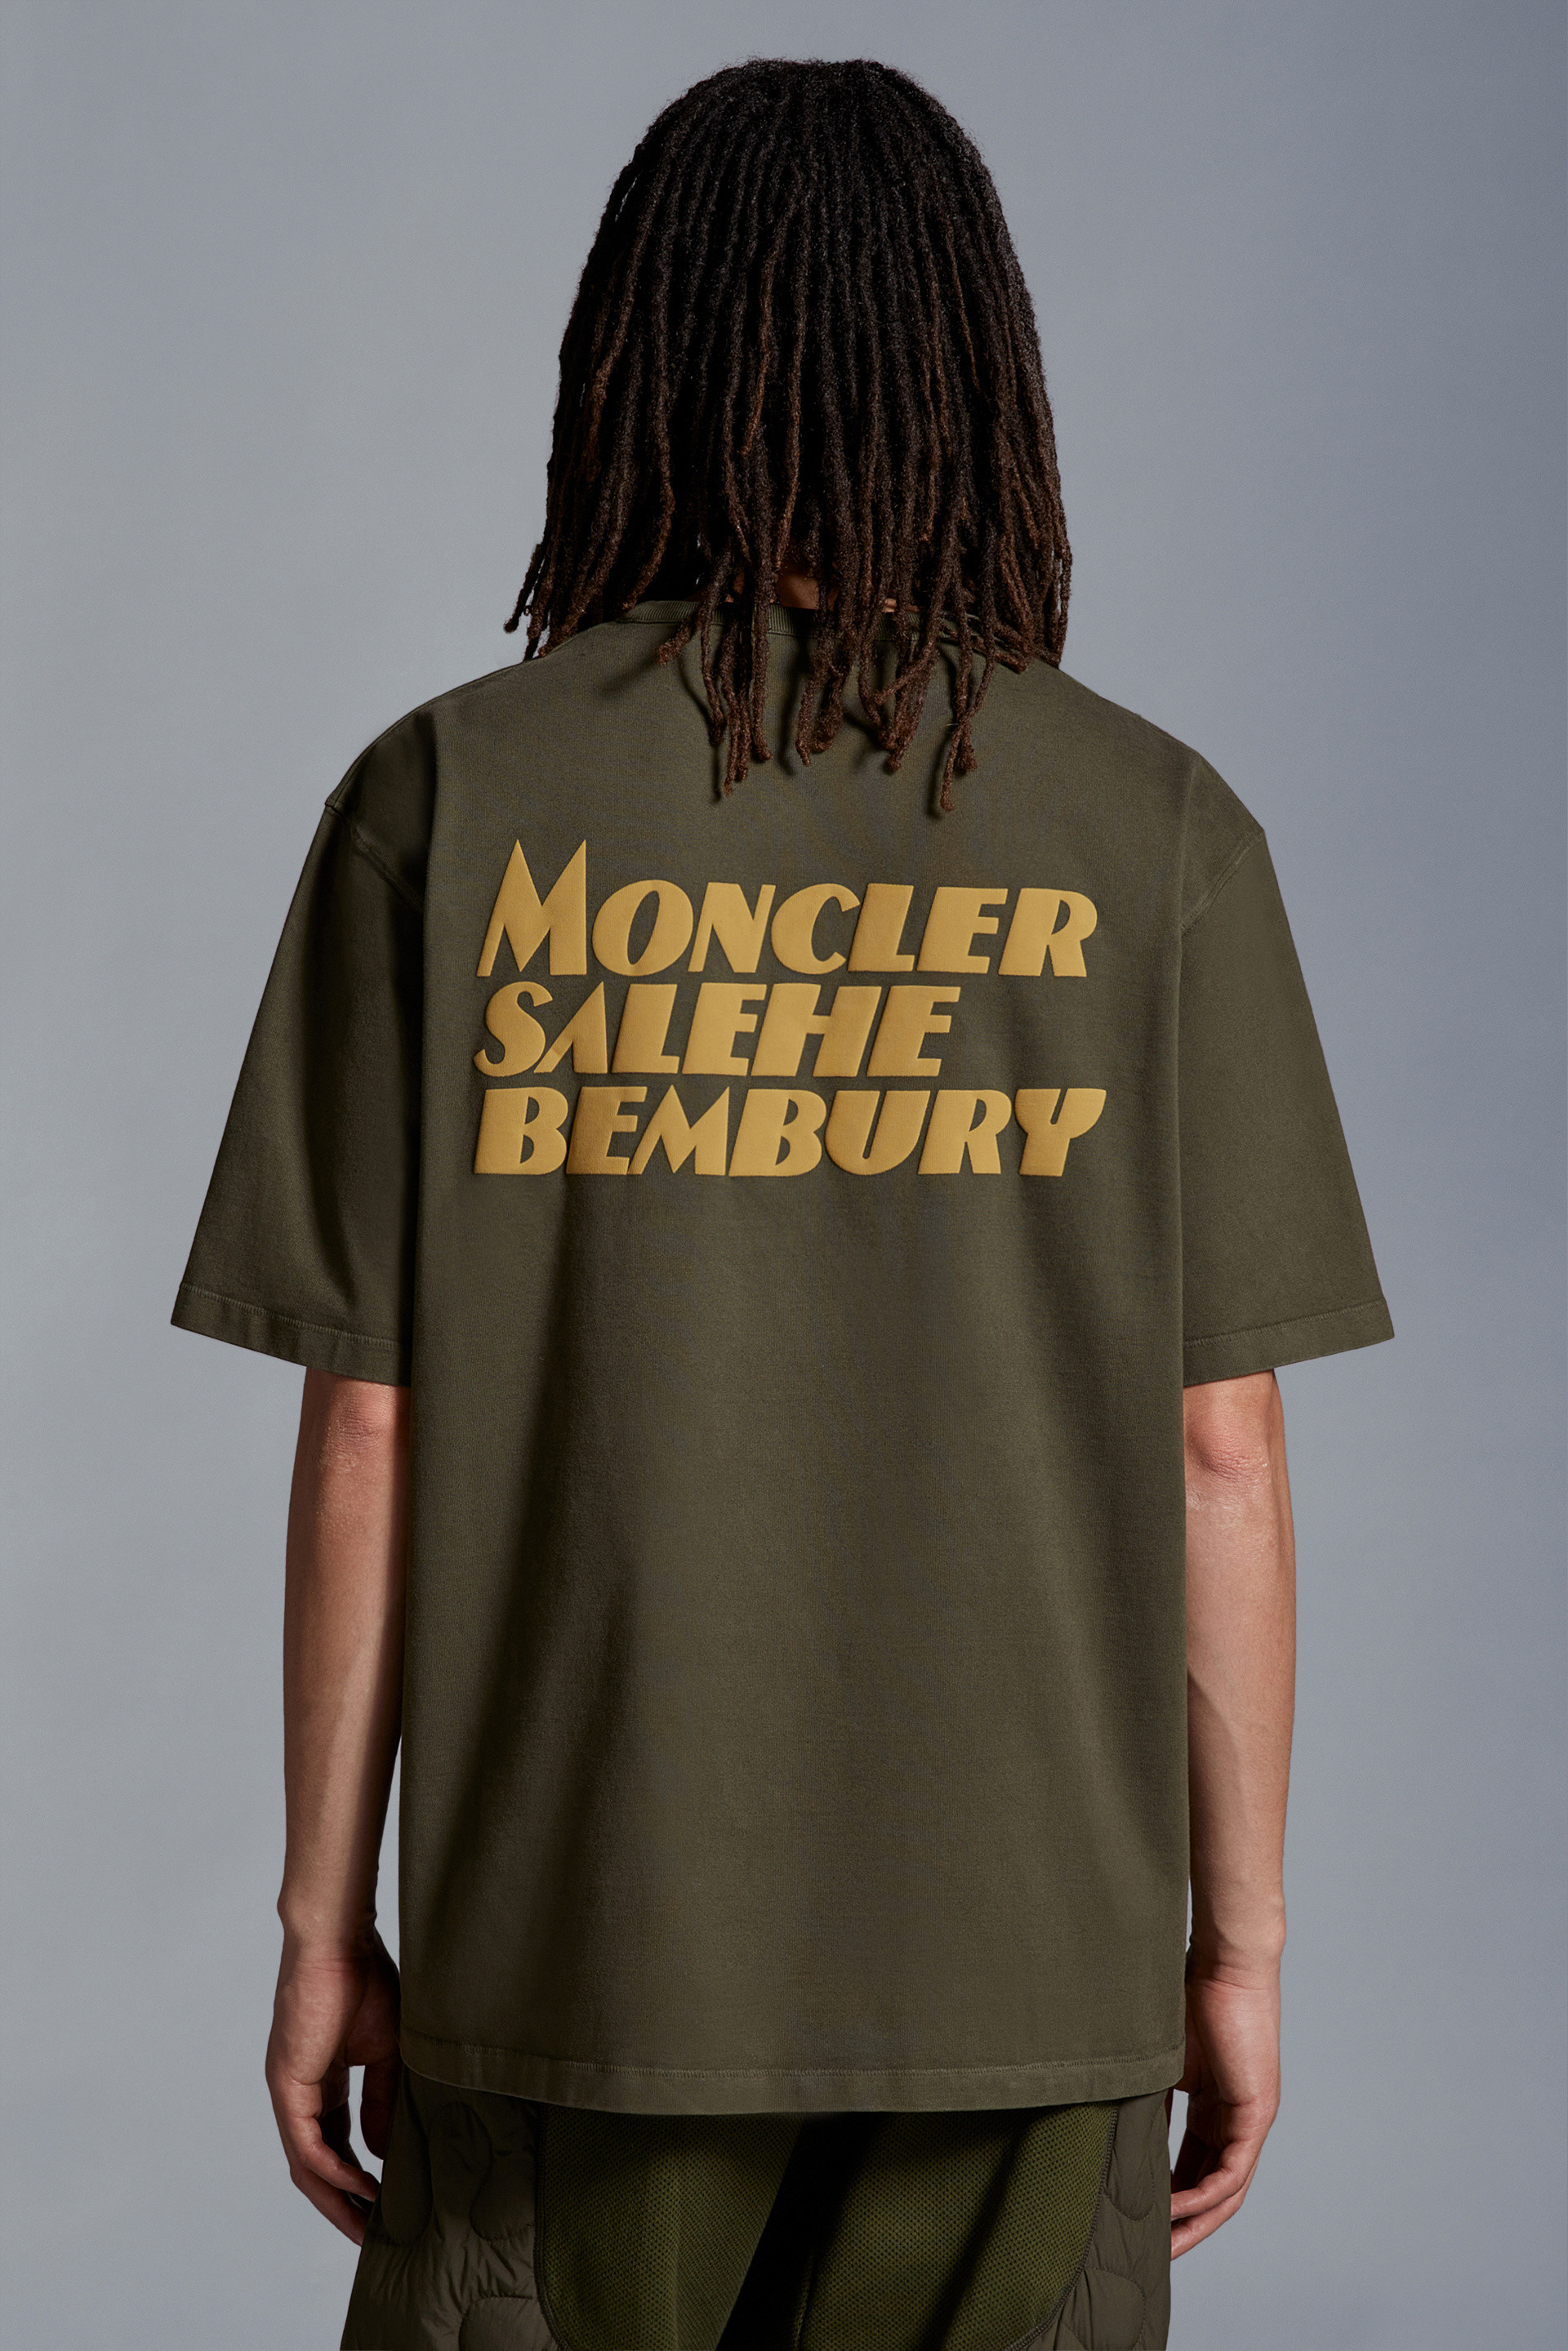 MONCLER X SALEHE BEMBURY★Tシャツ